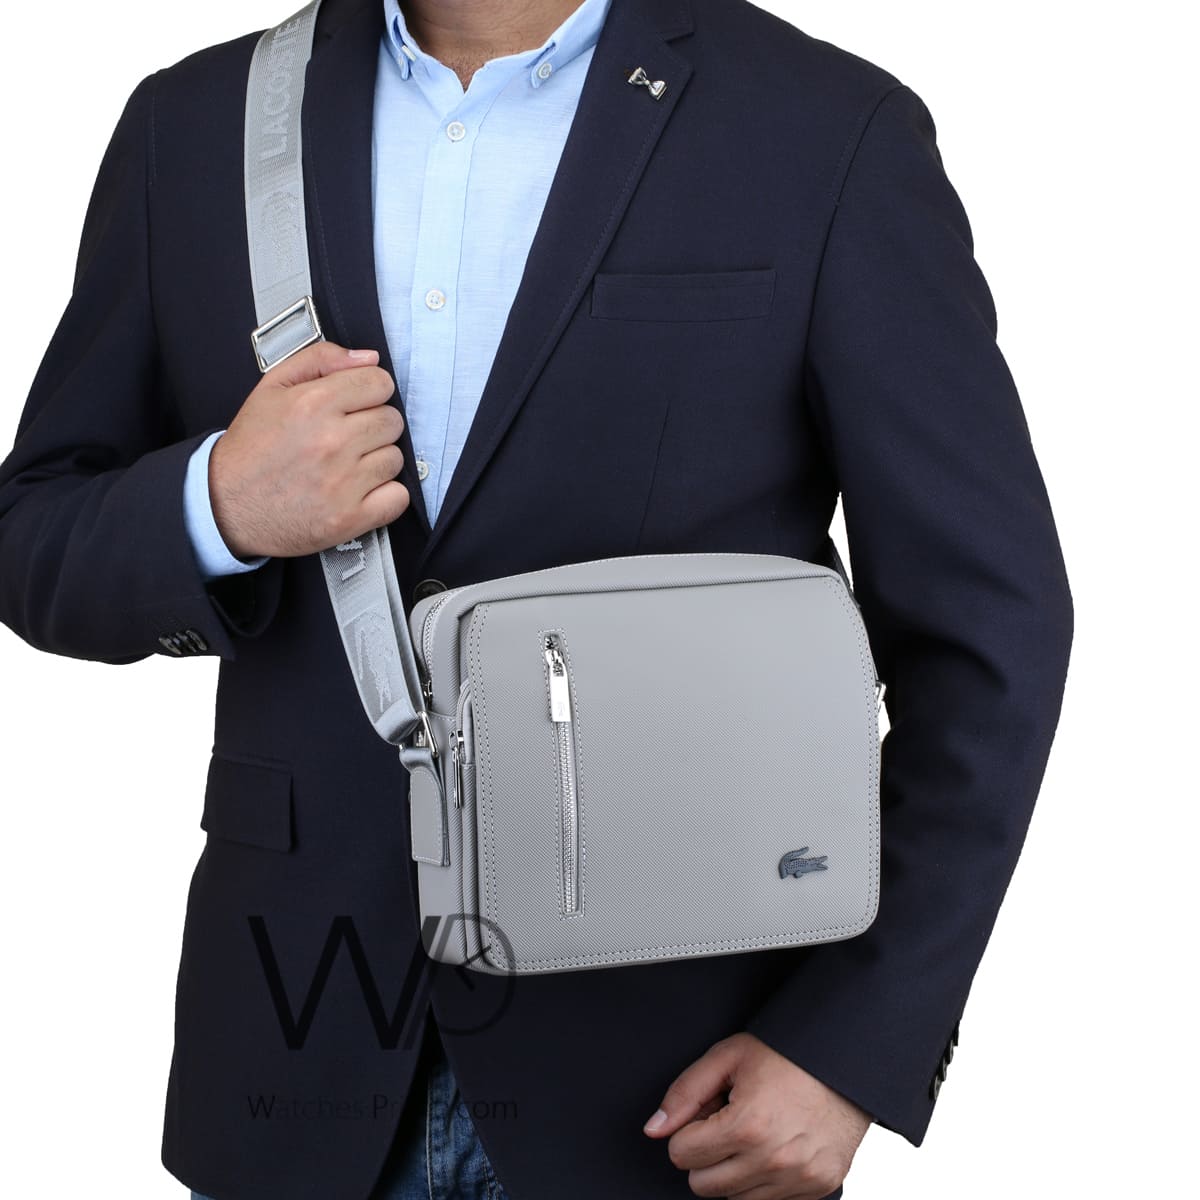 Lacoste Crossbody Mini Laptop Bag For Men | Watches Prime